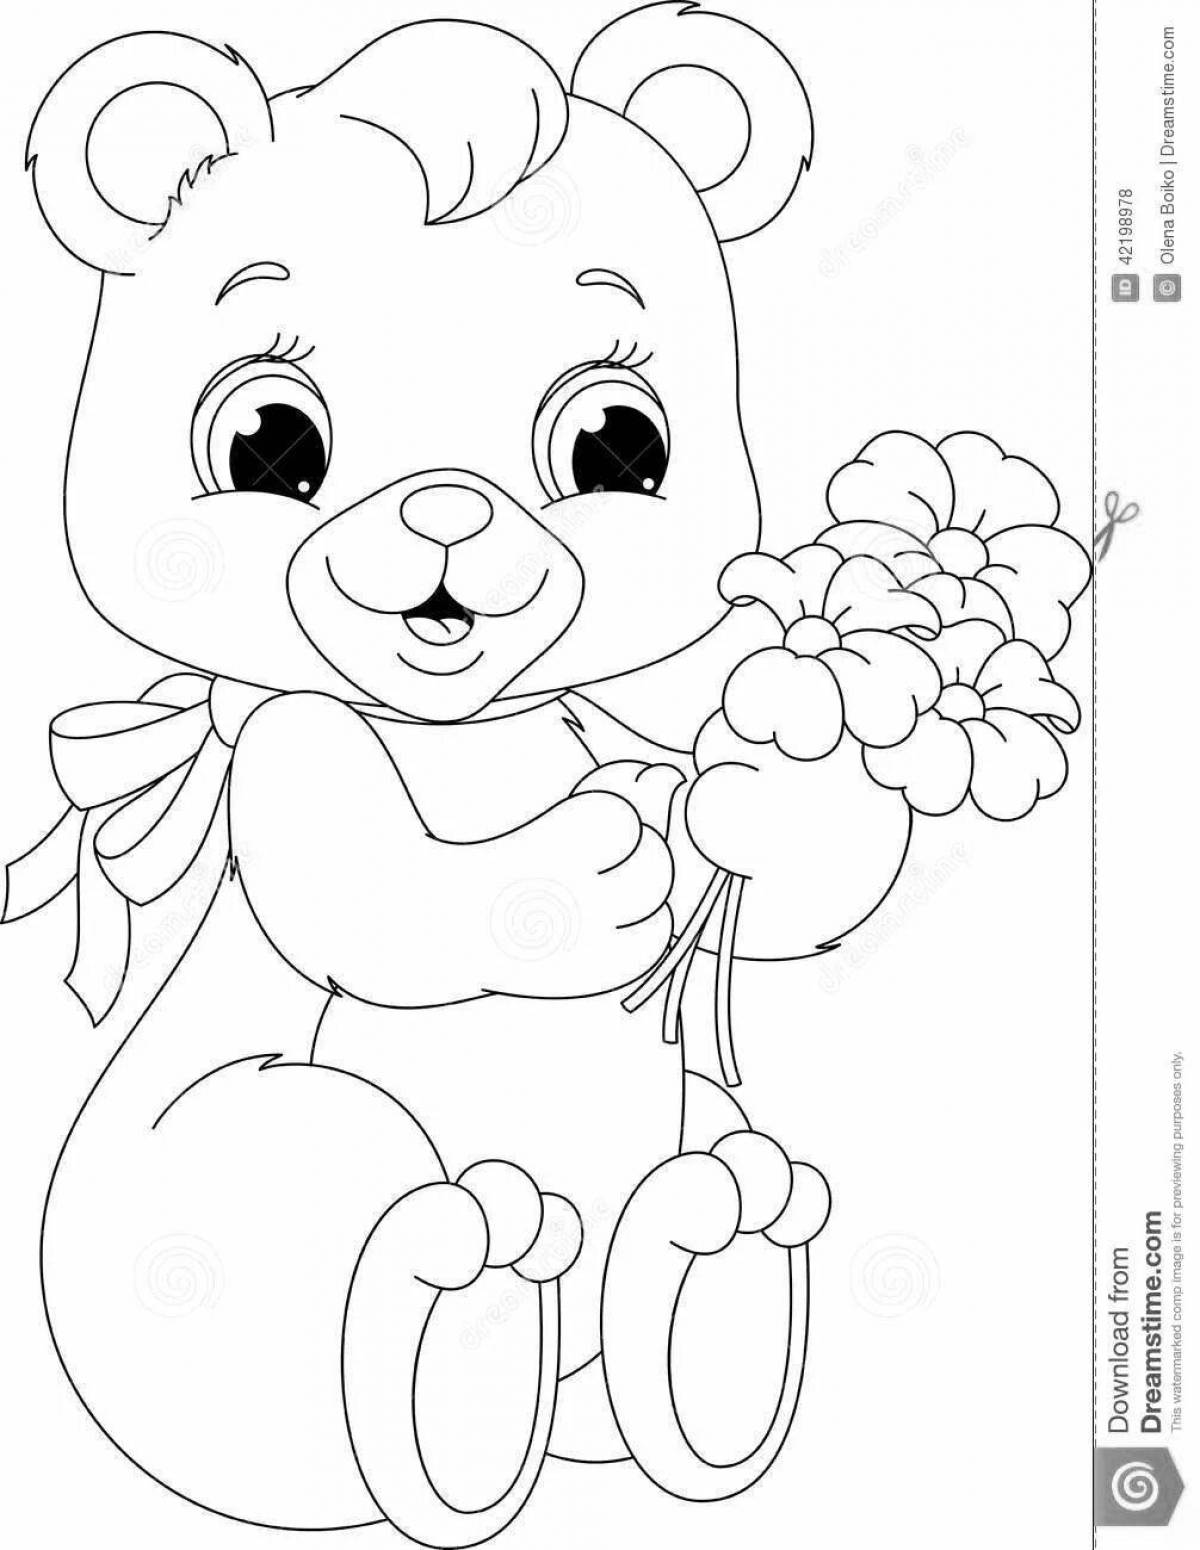 Joyful bear with a bow coloring book